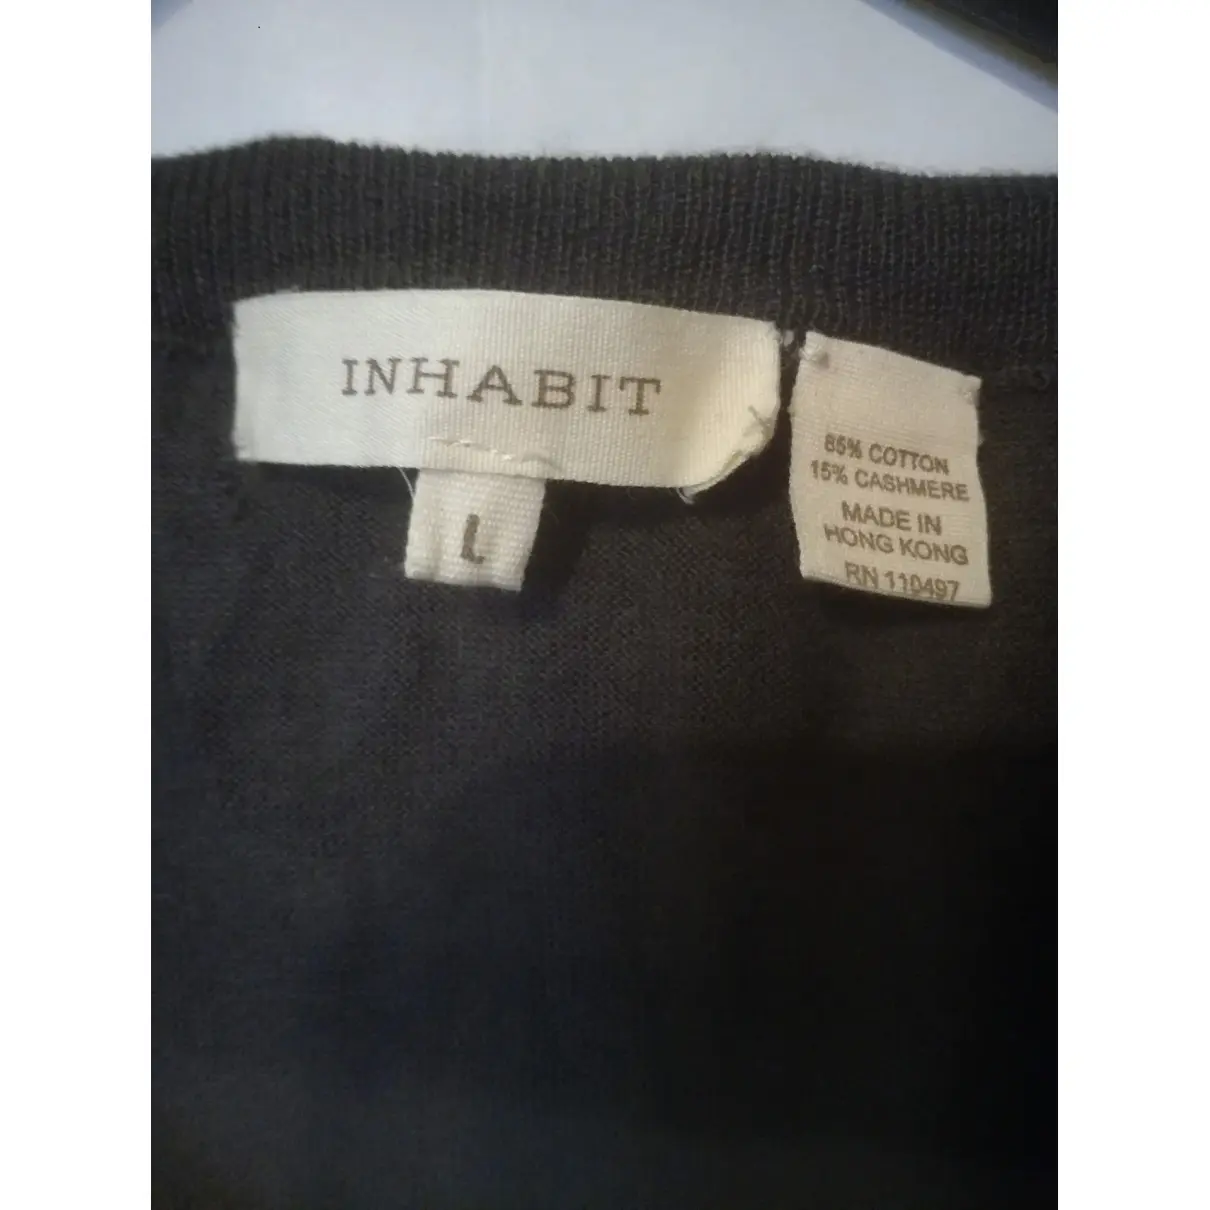 Buy Inhabit Cashmere mid-length dress online